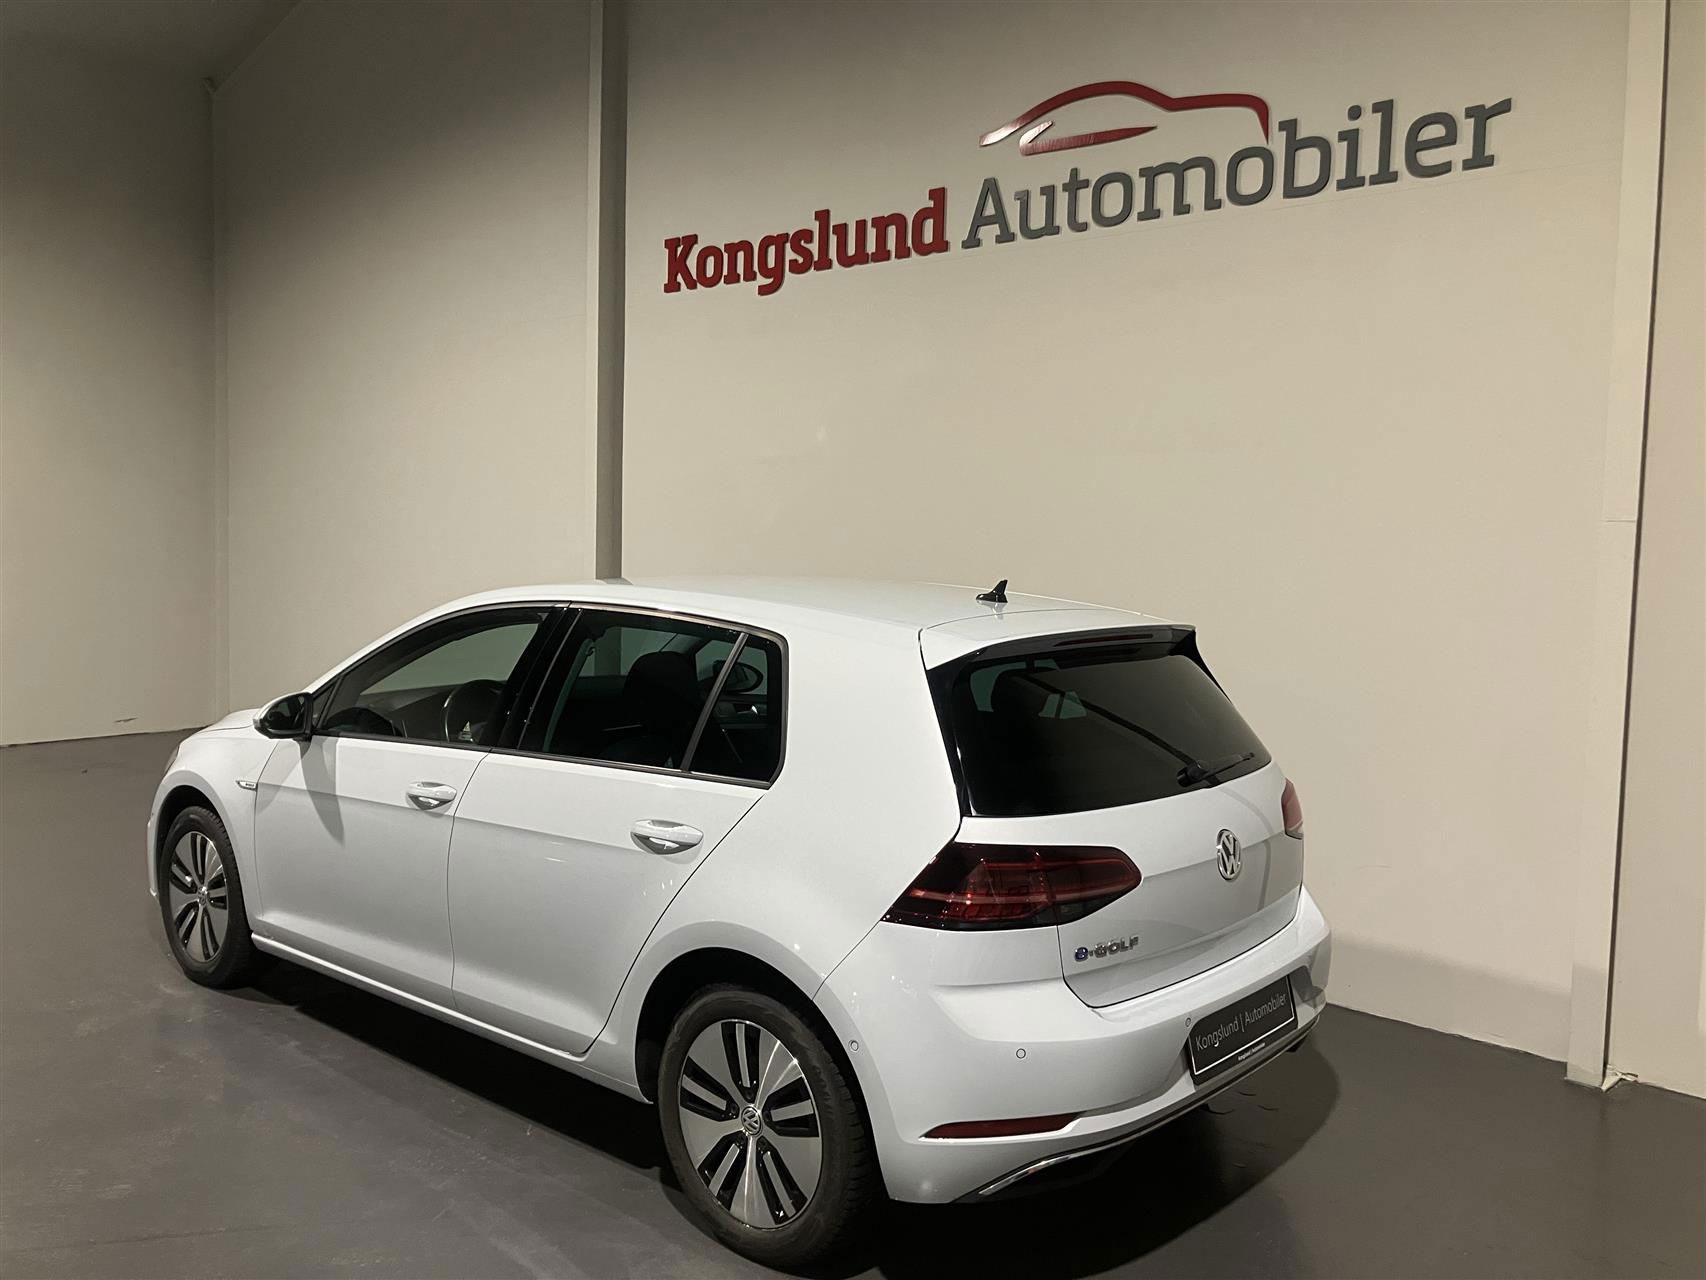 VW Golf 2019